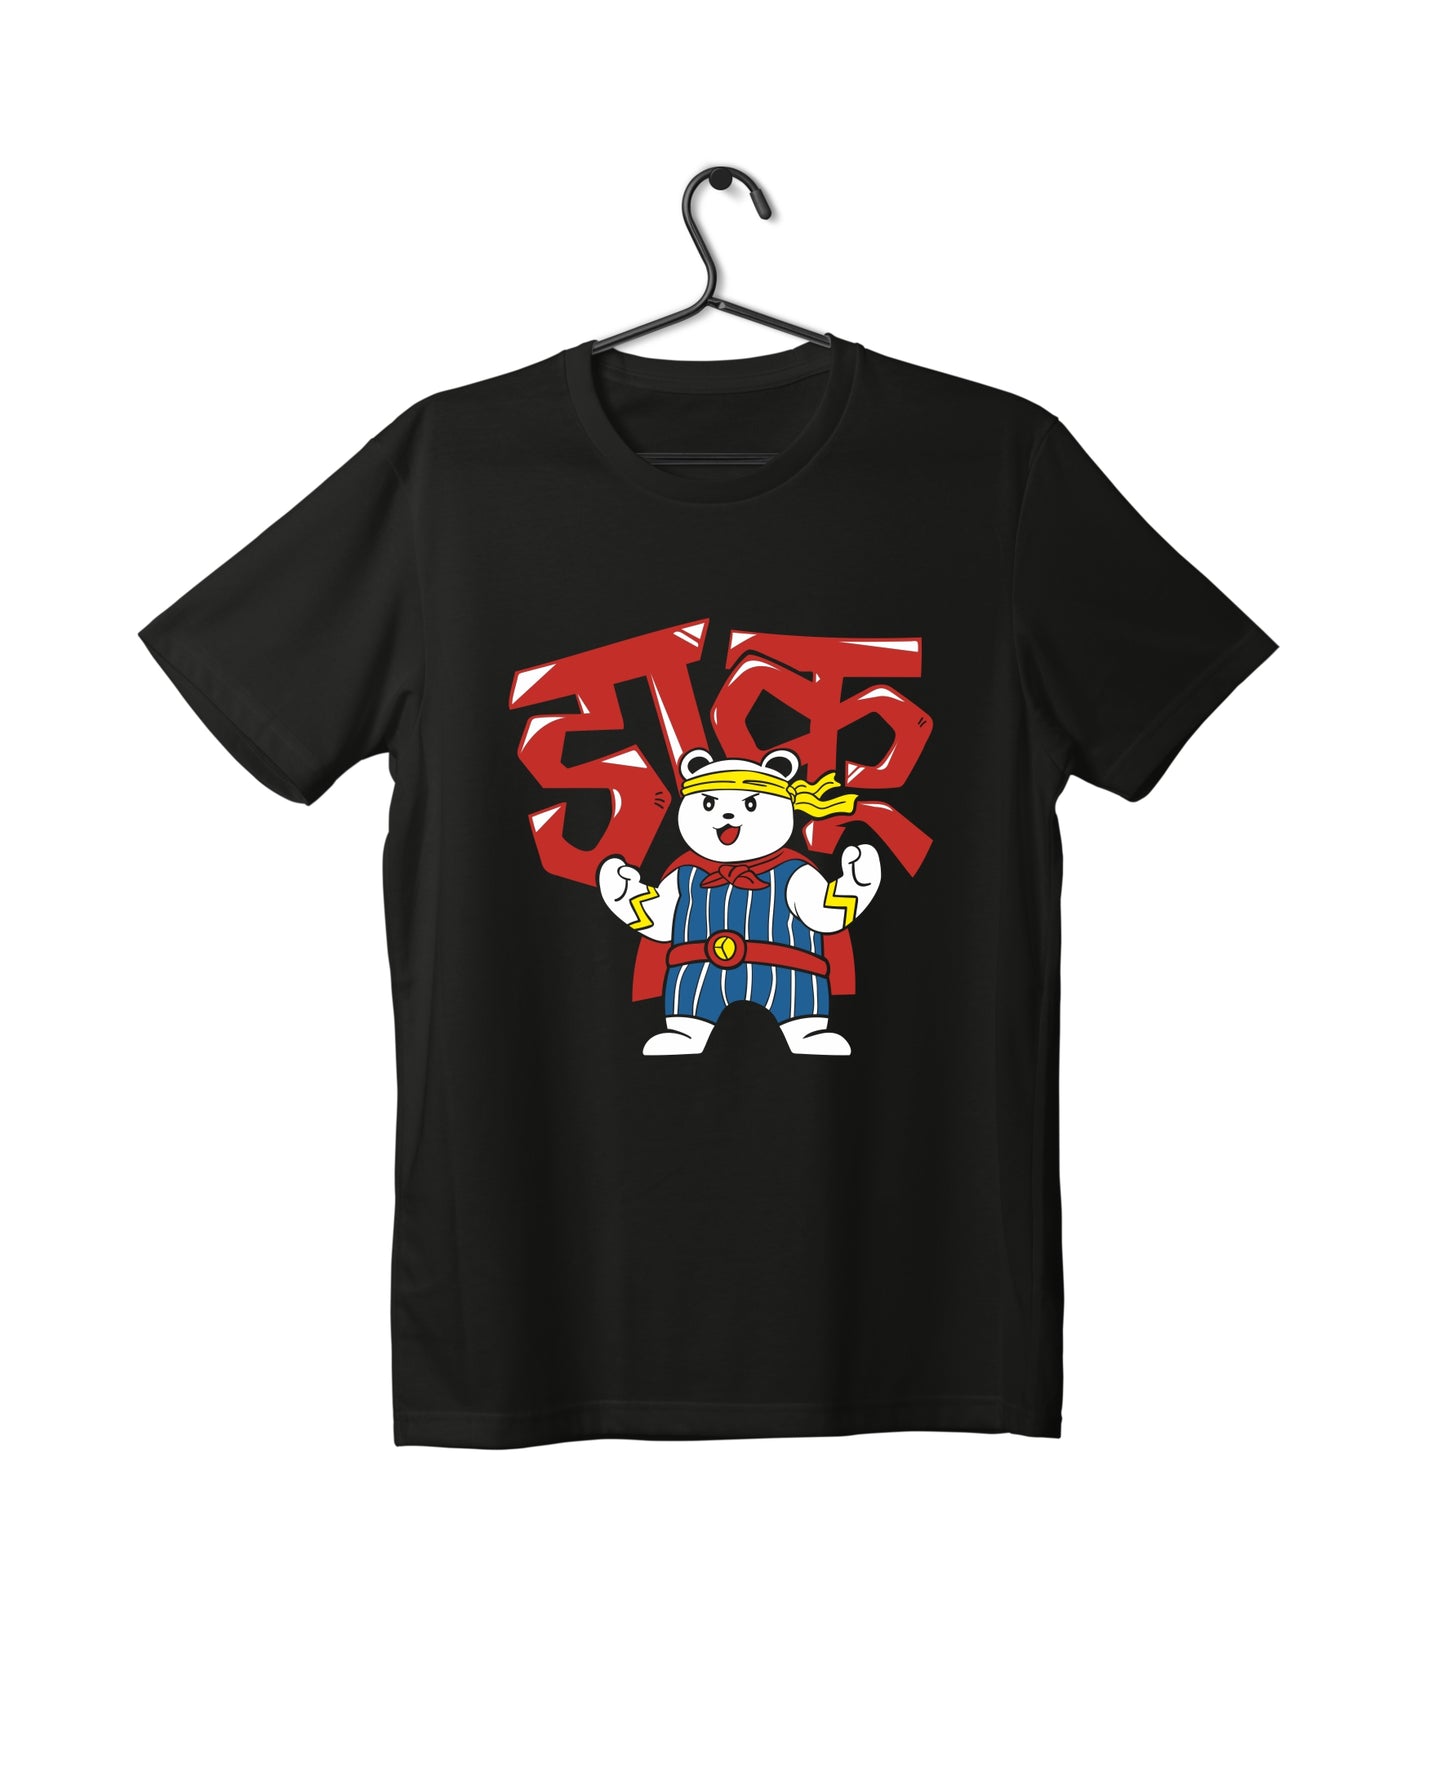 Daku - Black - Unisex Kids T-shirt